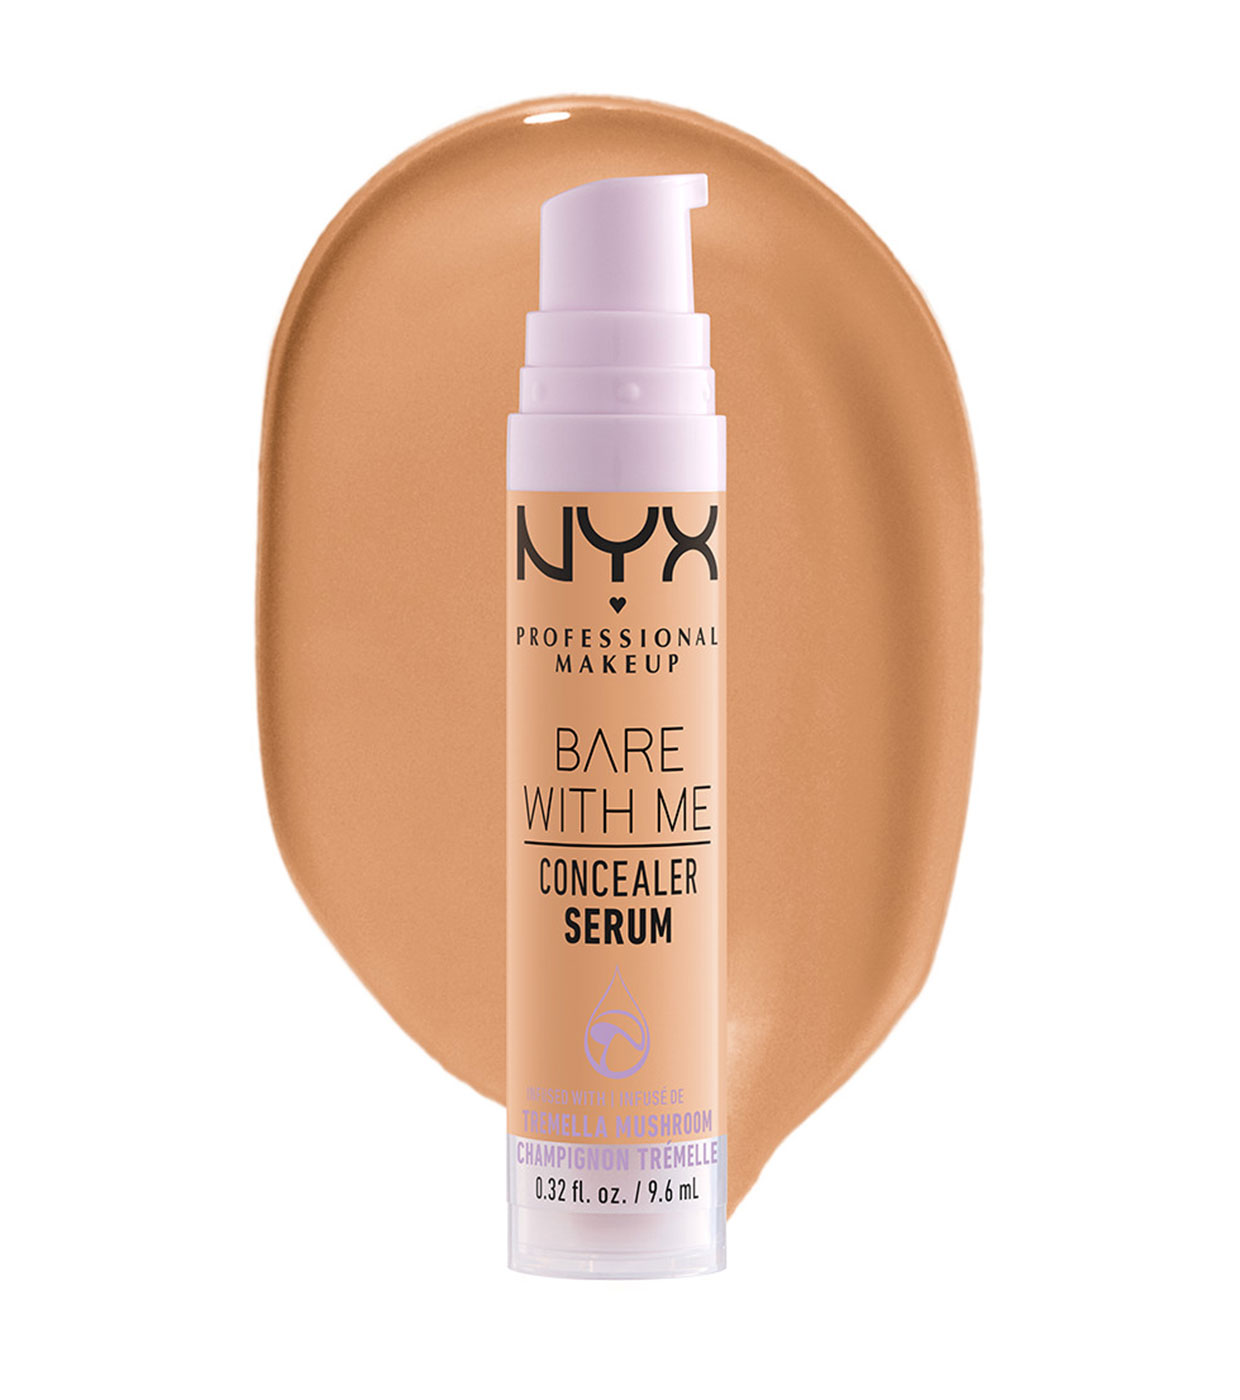 https://www.maquibeauty.com/images/productos/nyx-professional-makeup-corrector-liquido-concealer-serum-bare-with-me-5-5-medium-golden-1-80979.jpeg